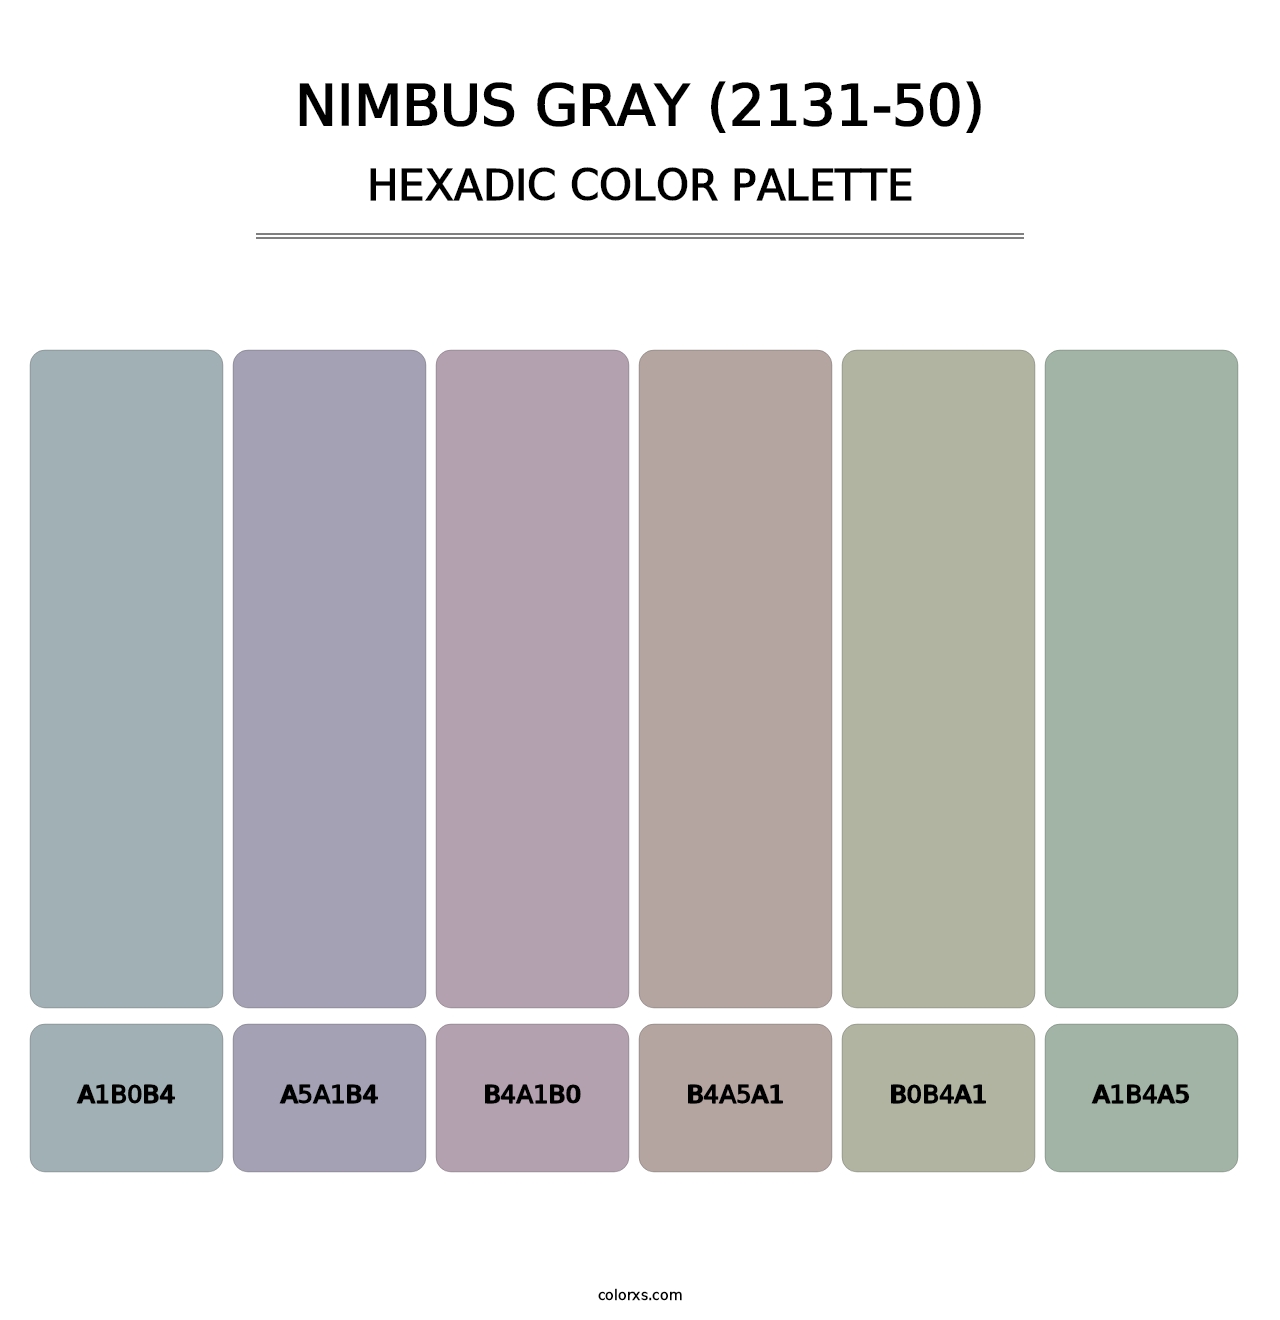 Nimbus Gray (2131-50) - Hexadic Color Palette